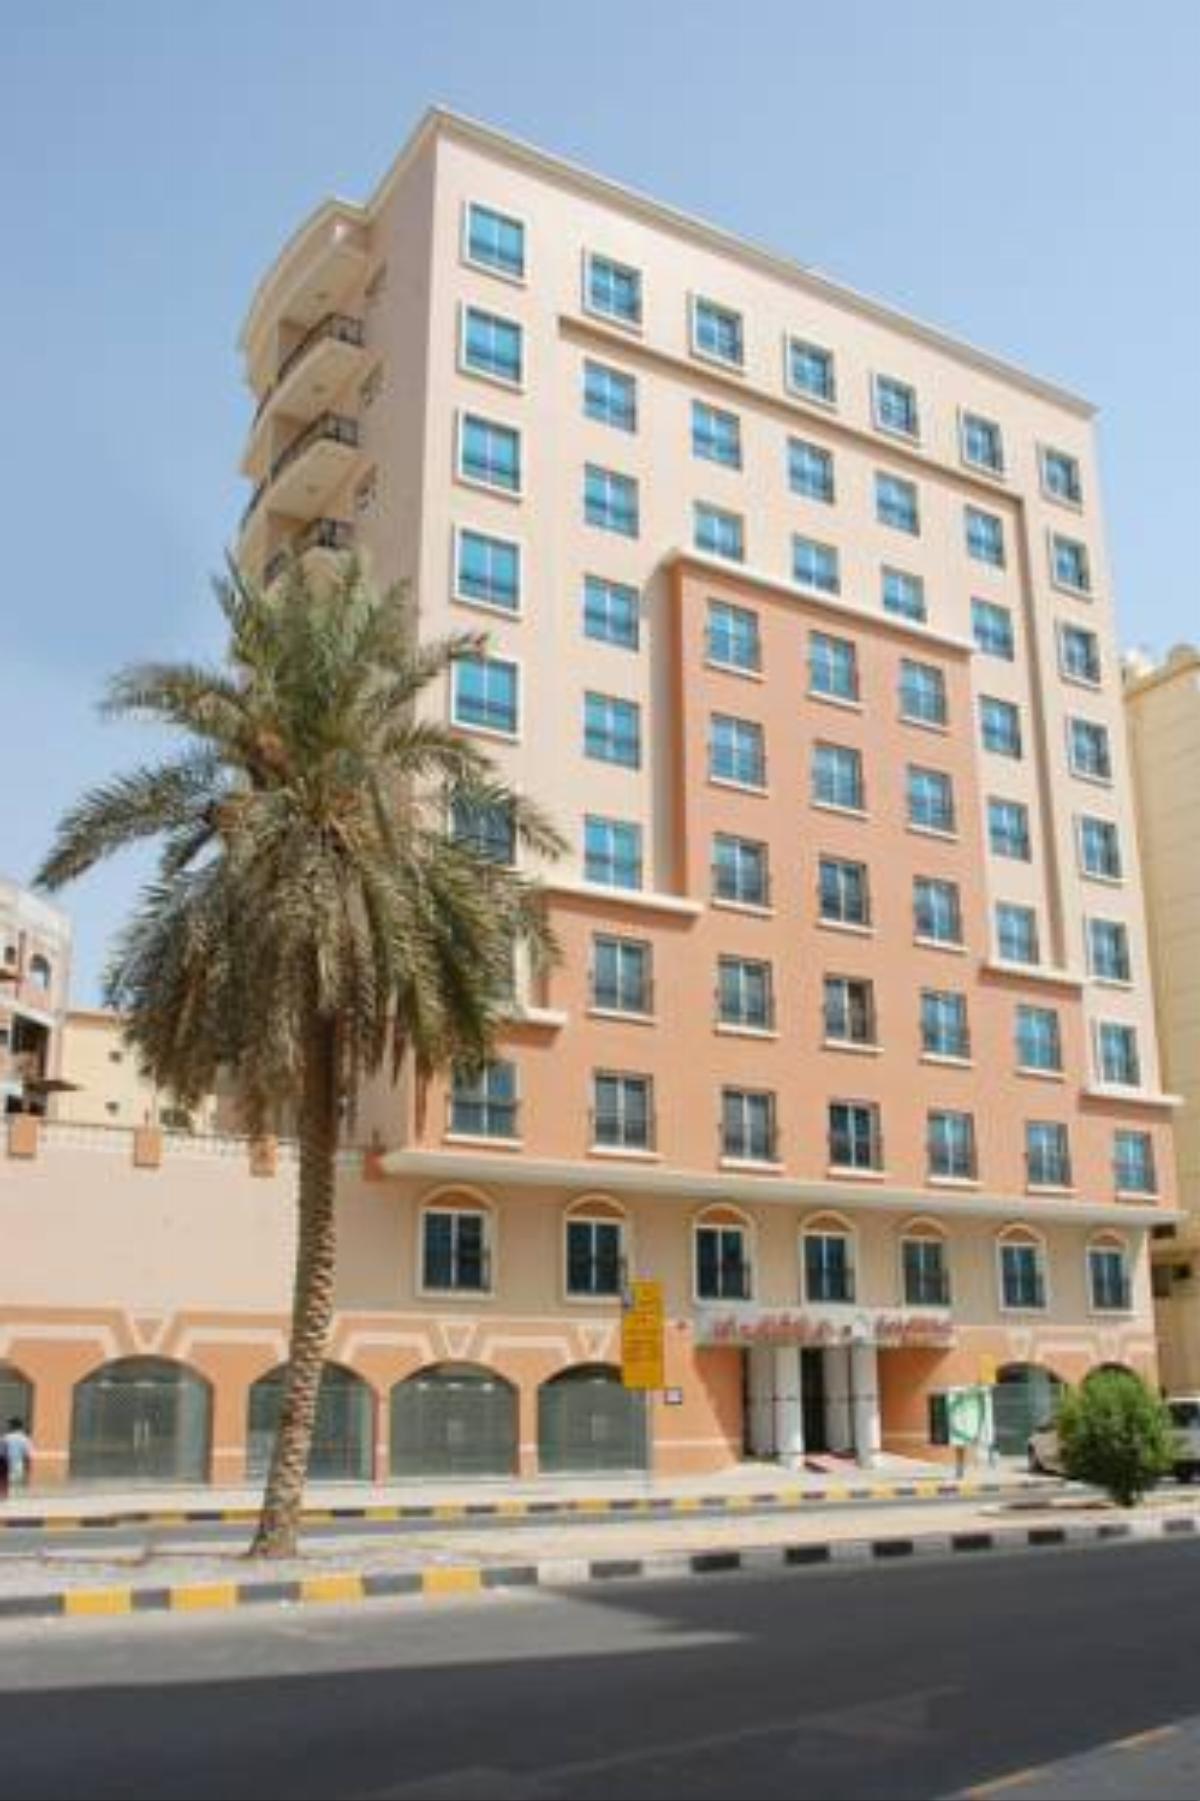 Baiti Hotel Apartments Hotel Sharjah United Arab Emirates